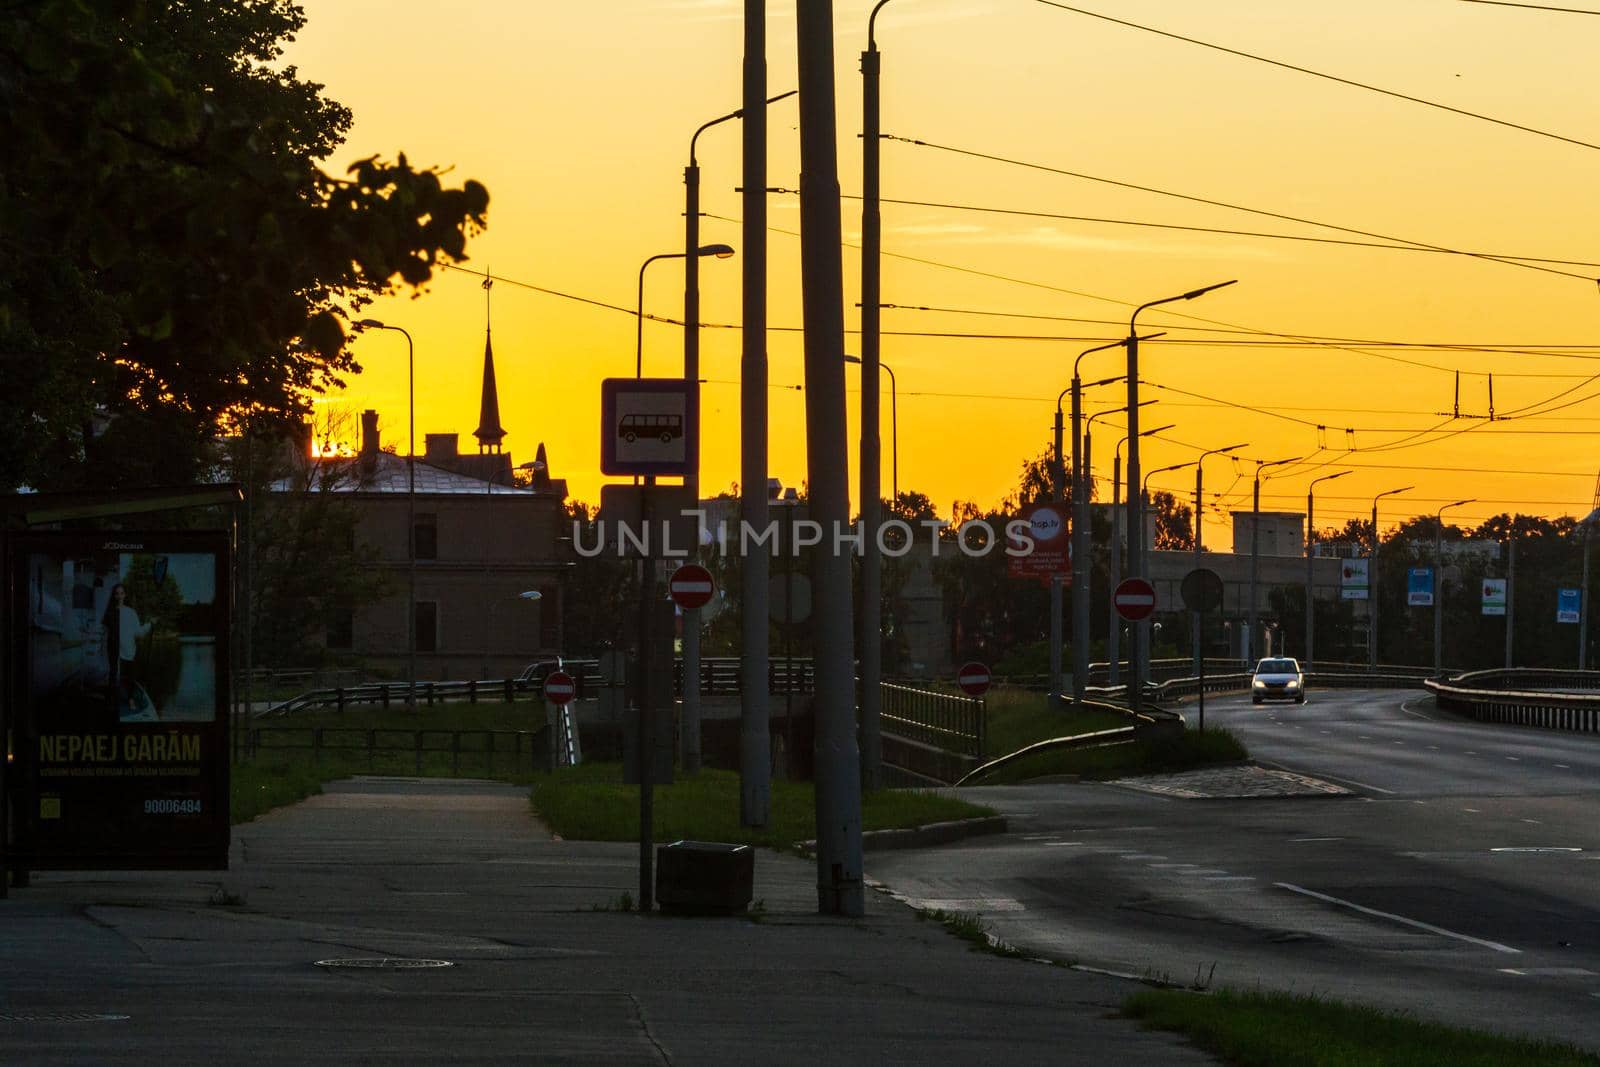 sunrise time city streets, bus station by scudrinja